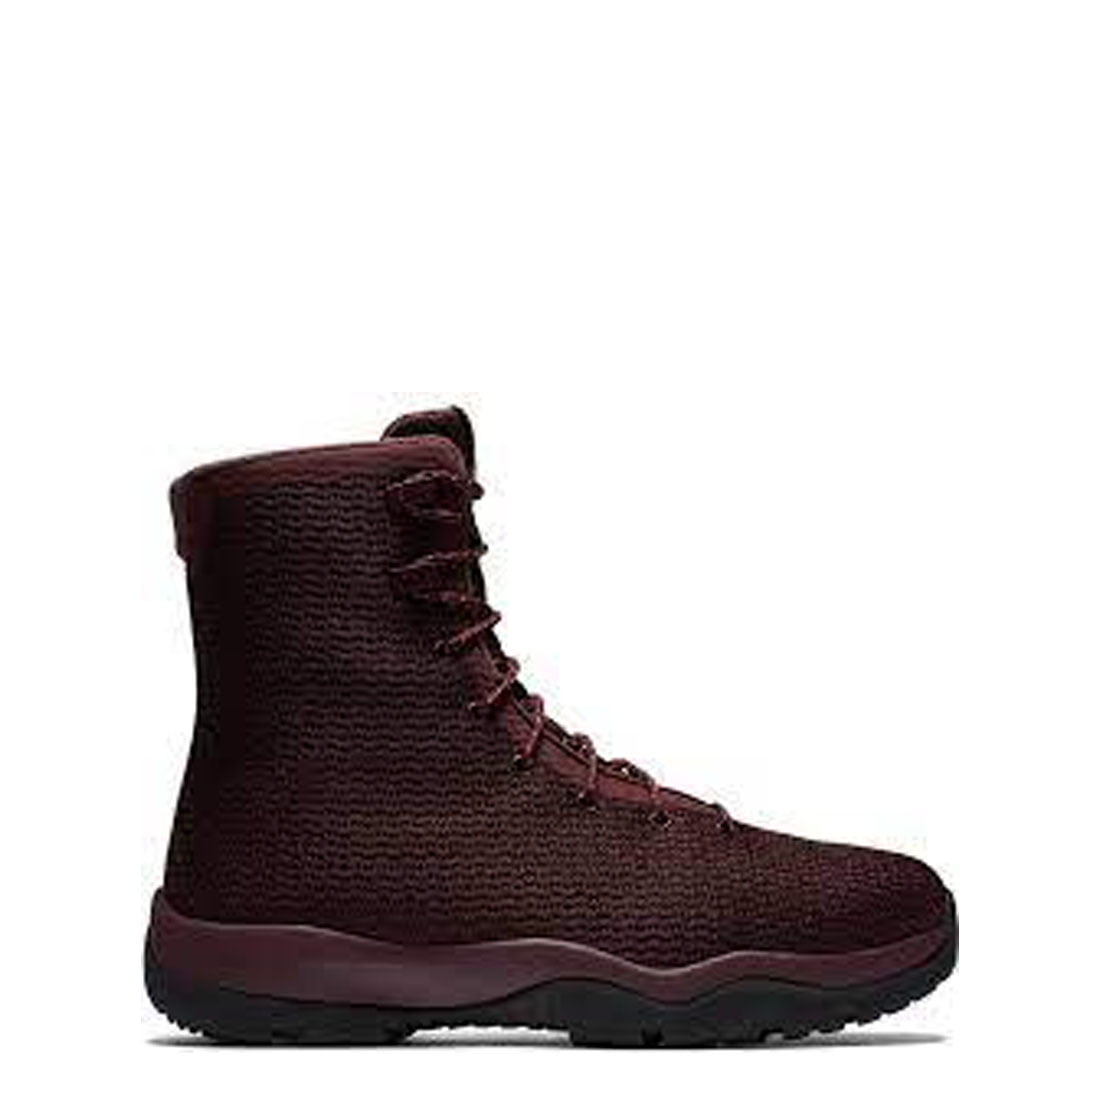 Nike Future Boot Lifestyle Men/Adult shoe 9 Casual 854554-600 Night Maroon - Walmart.com